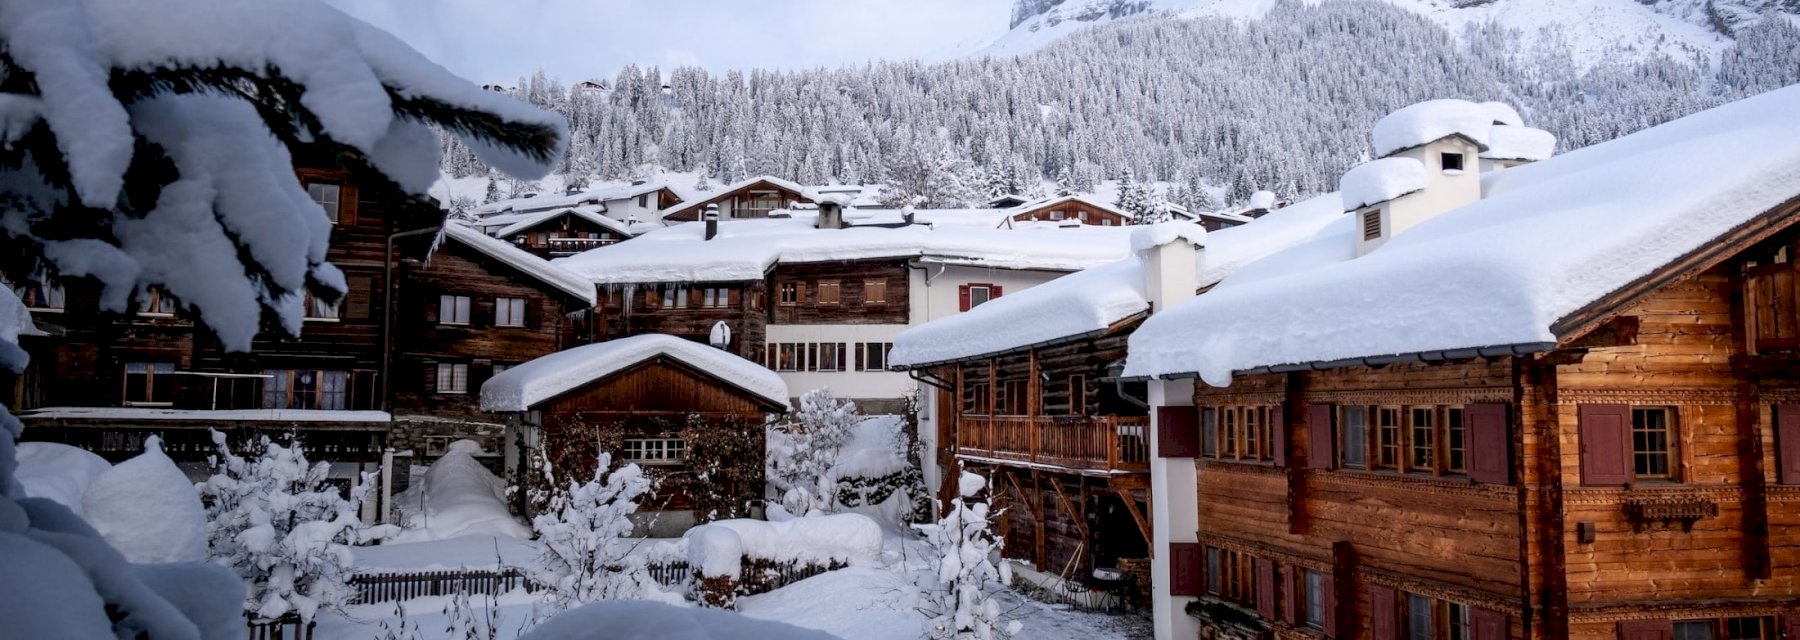 Best ski resorts to enjoy this winter